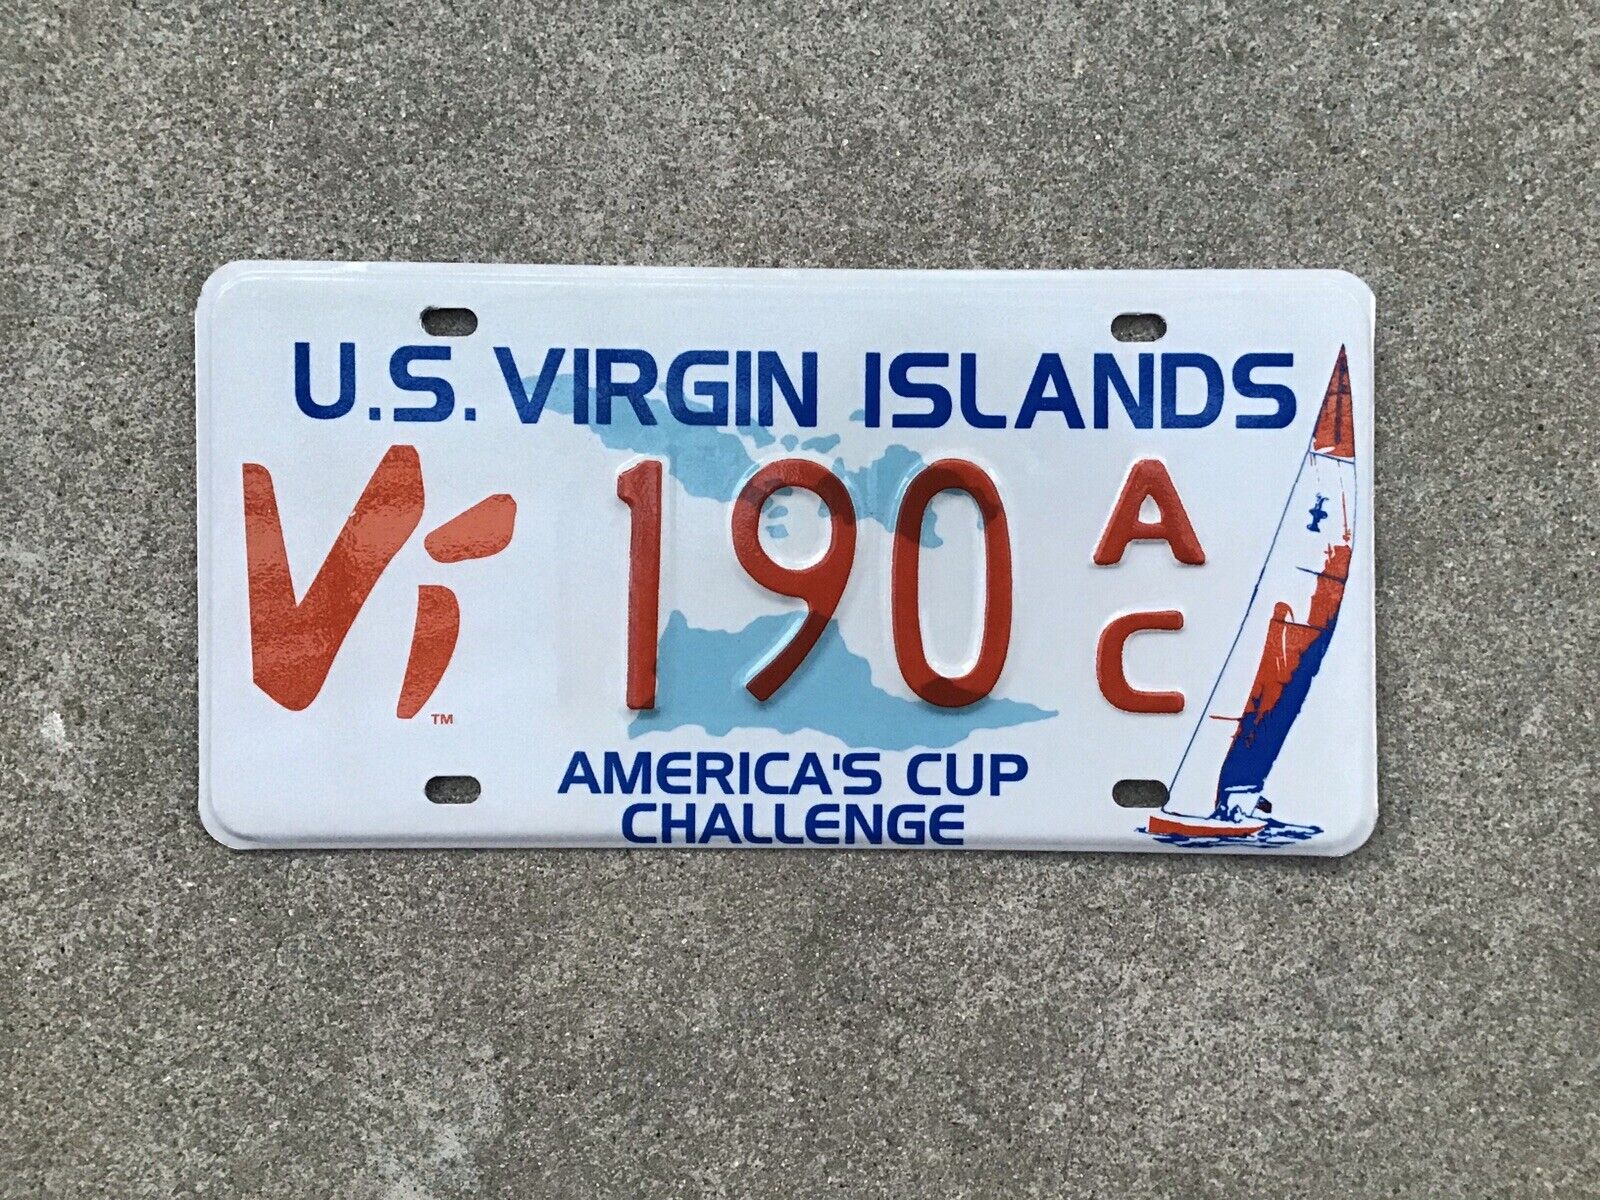 1997 - U.S. VIRGIN ISLANDS - AMERICA\'S CUP CHALLENGE - LICENSE PLATE - NEW